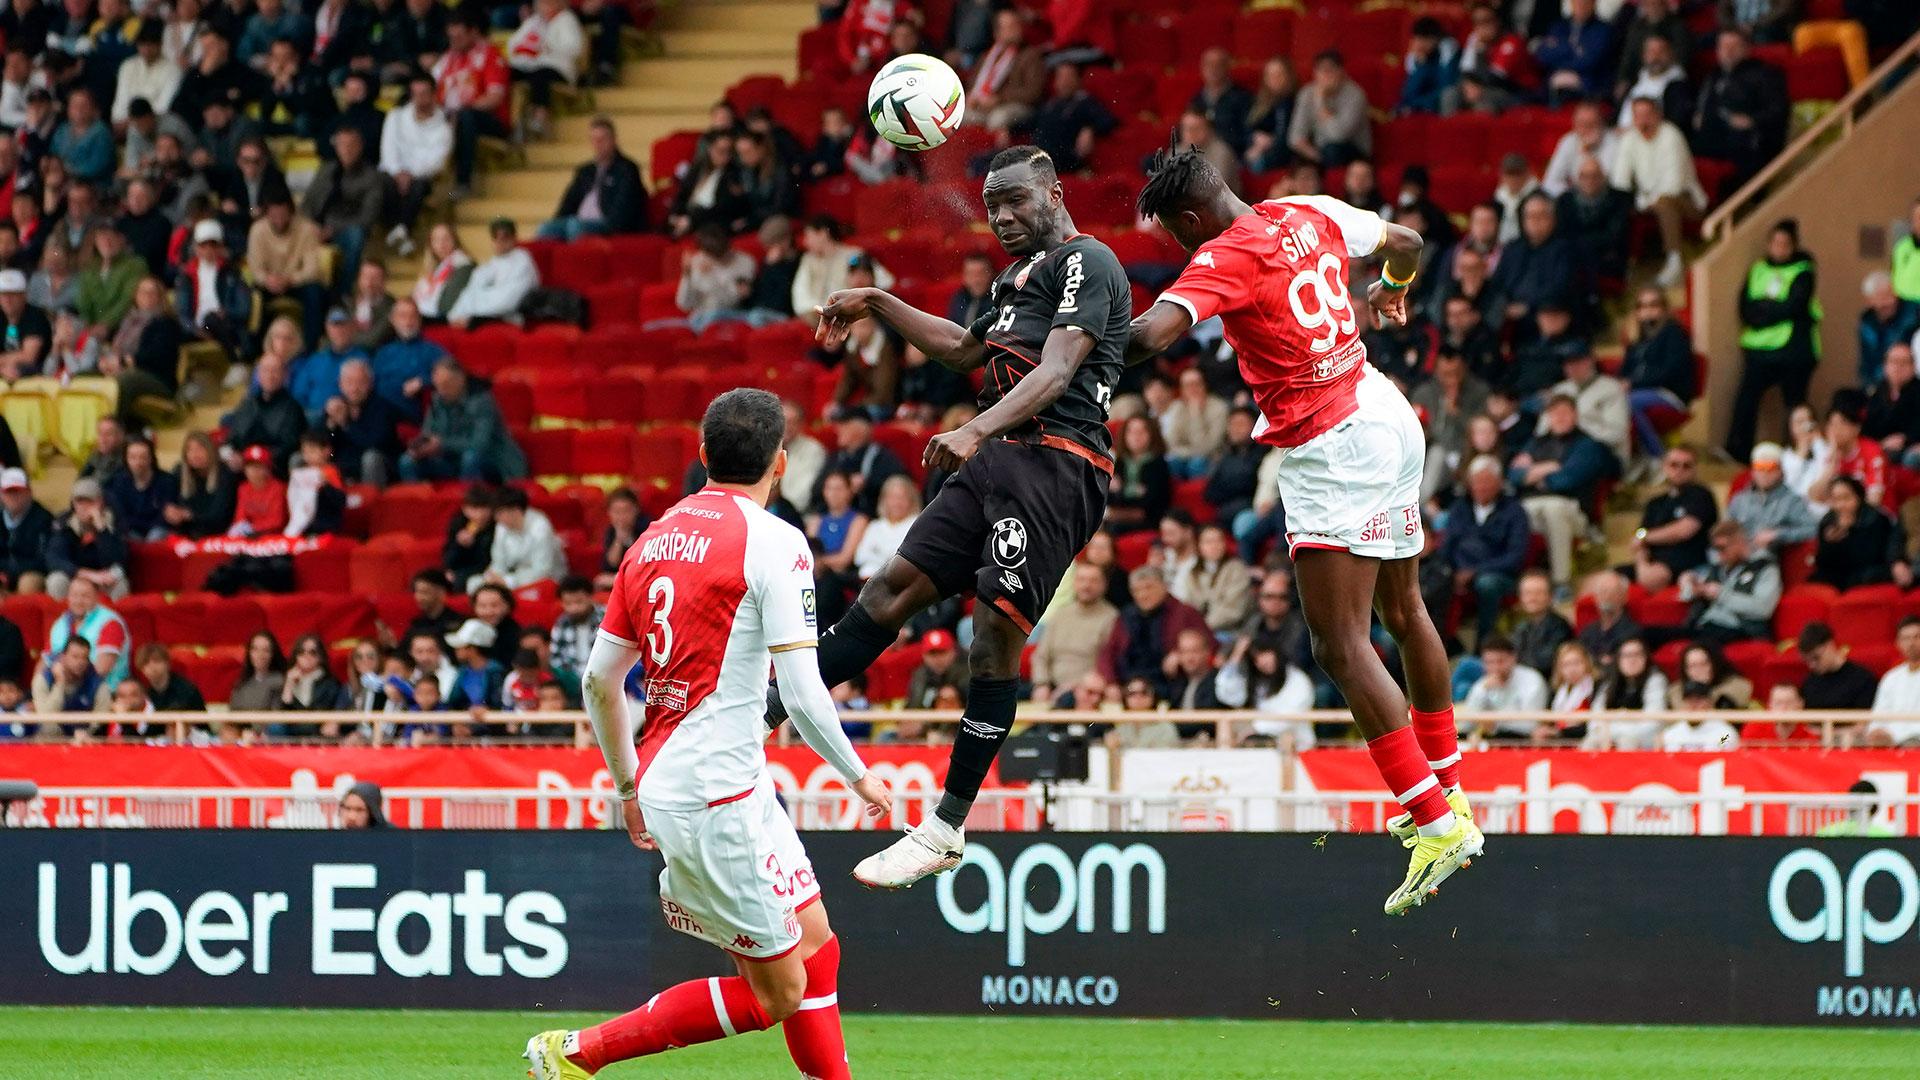 VIDEO | Ligue 1 Highlights: Monaco vs Lorient